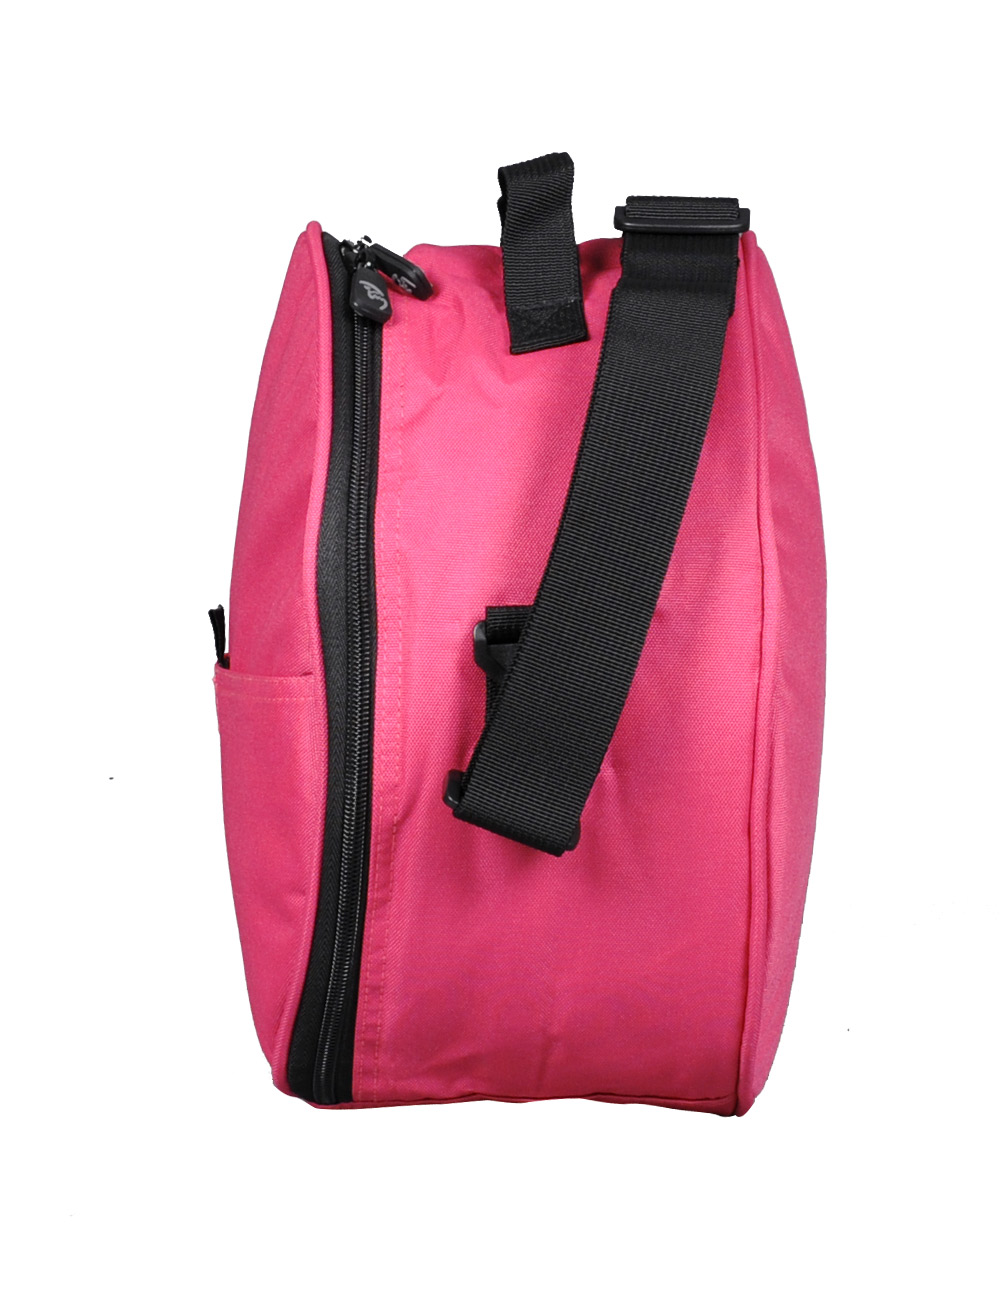 Regulator bag pink